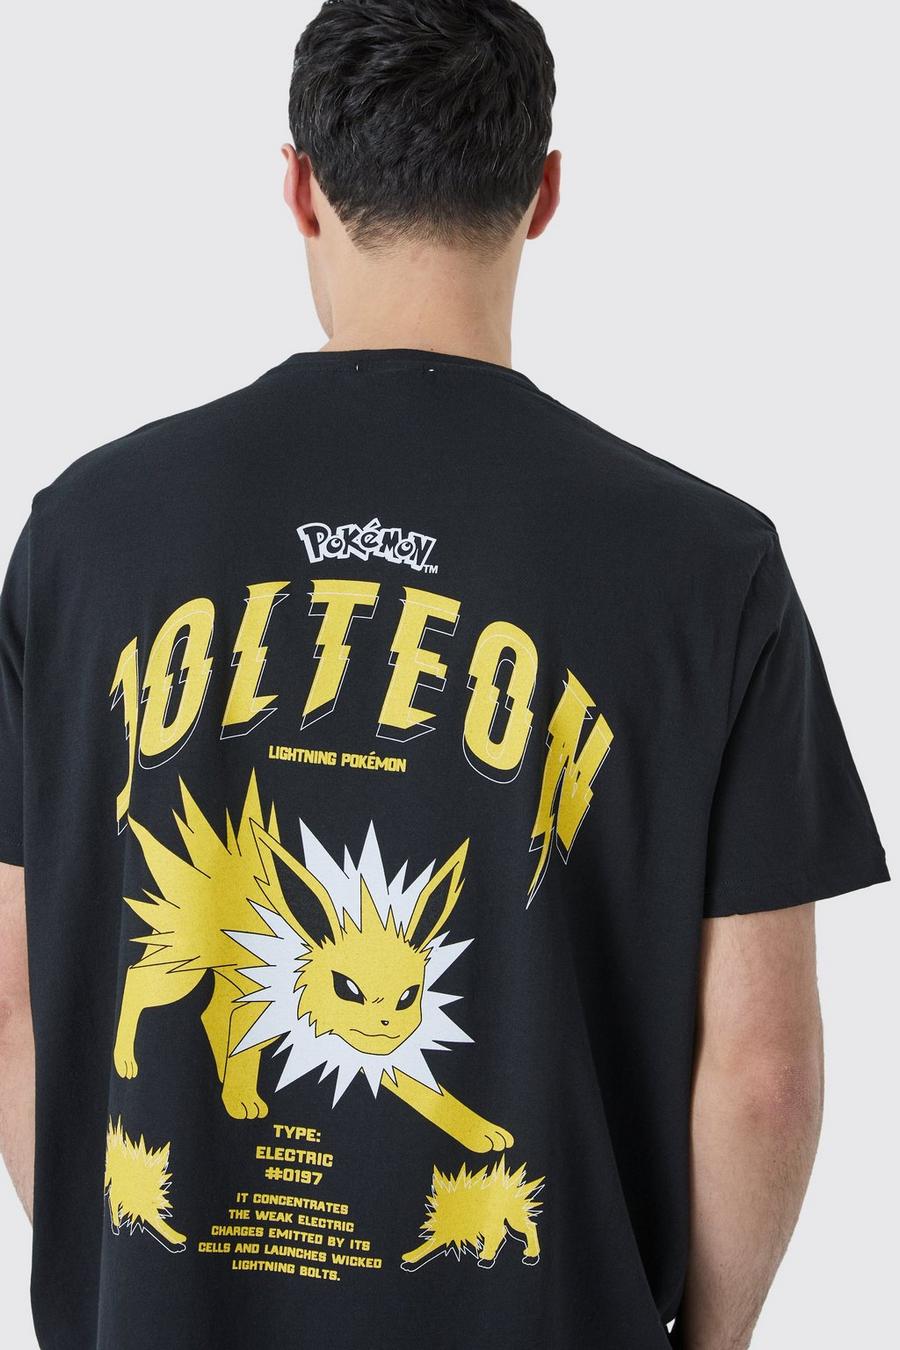 T-shirt oversize ufficiale di Pokemon Jolteon, Black